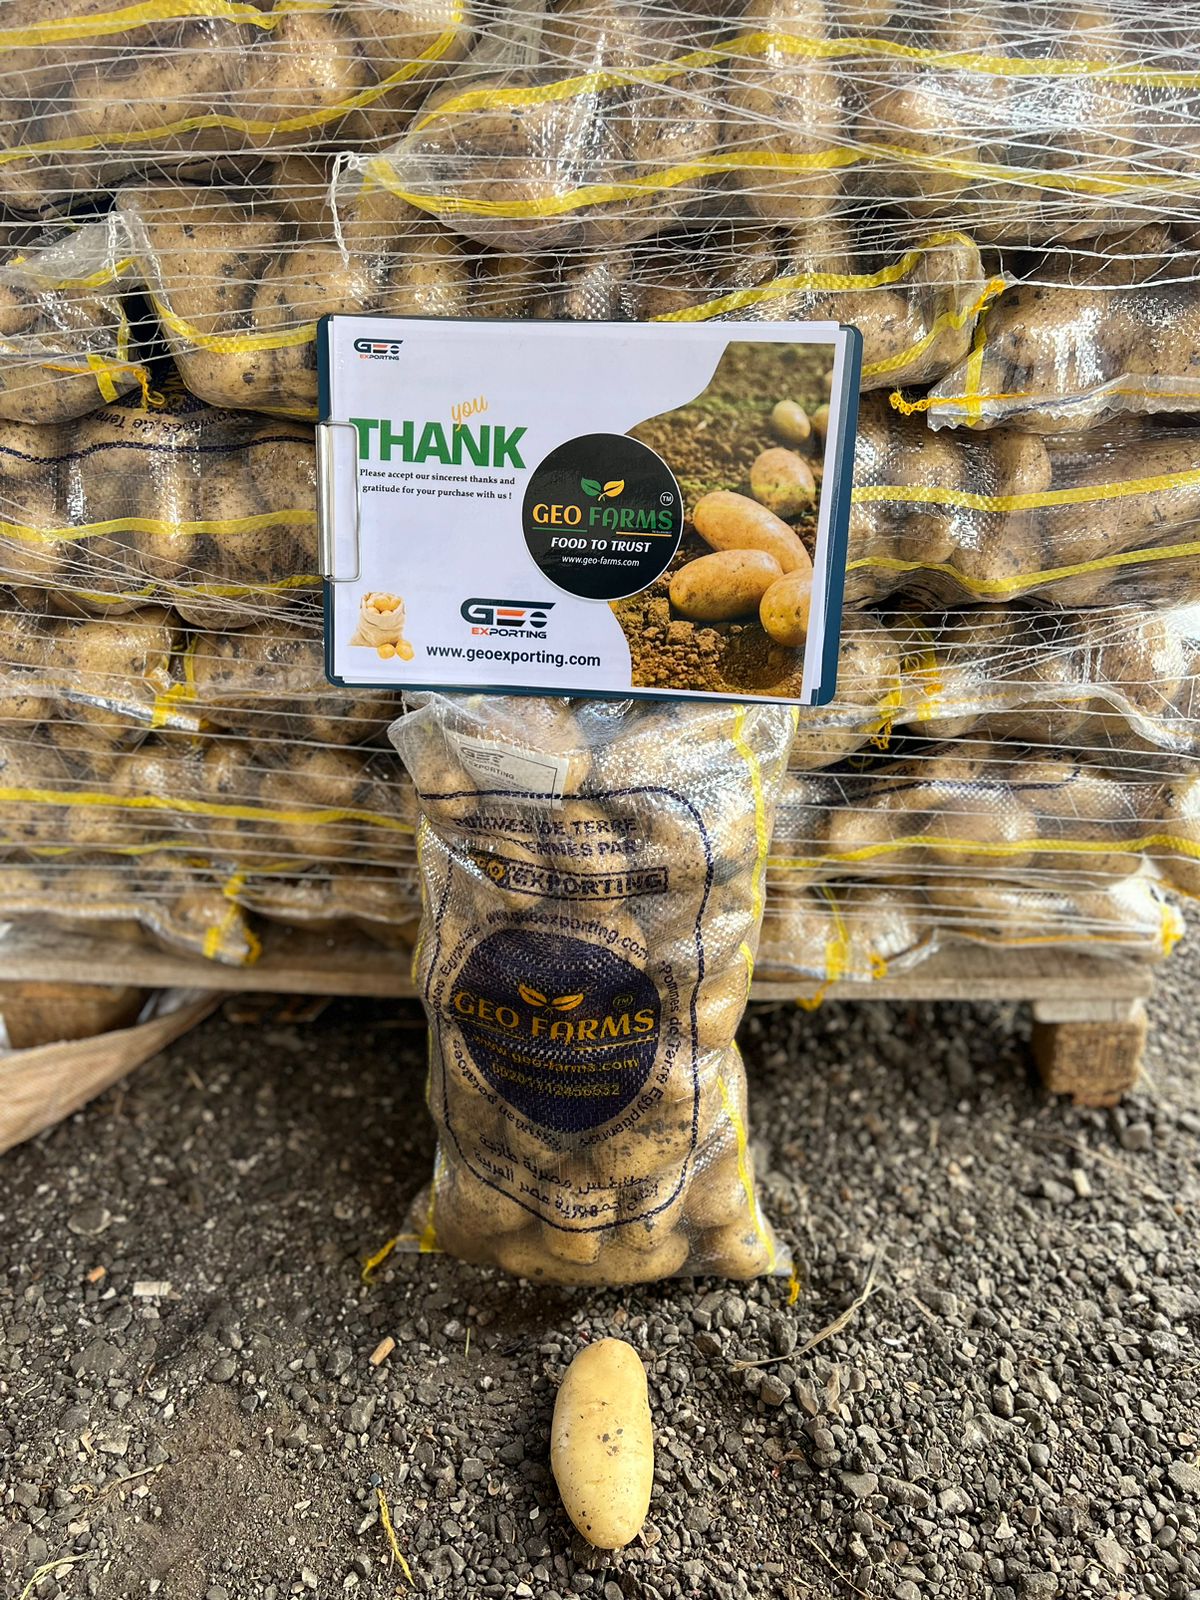 geo farms brand for egyptian potatoes